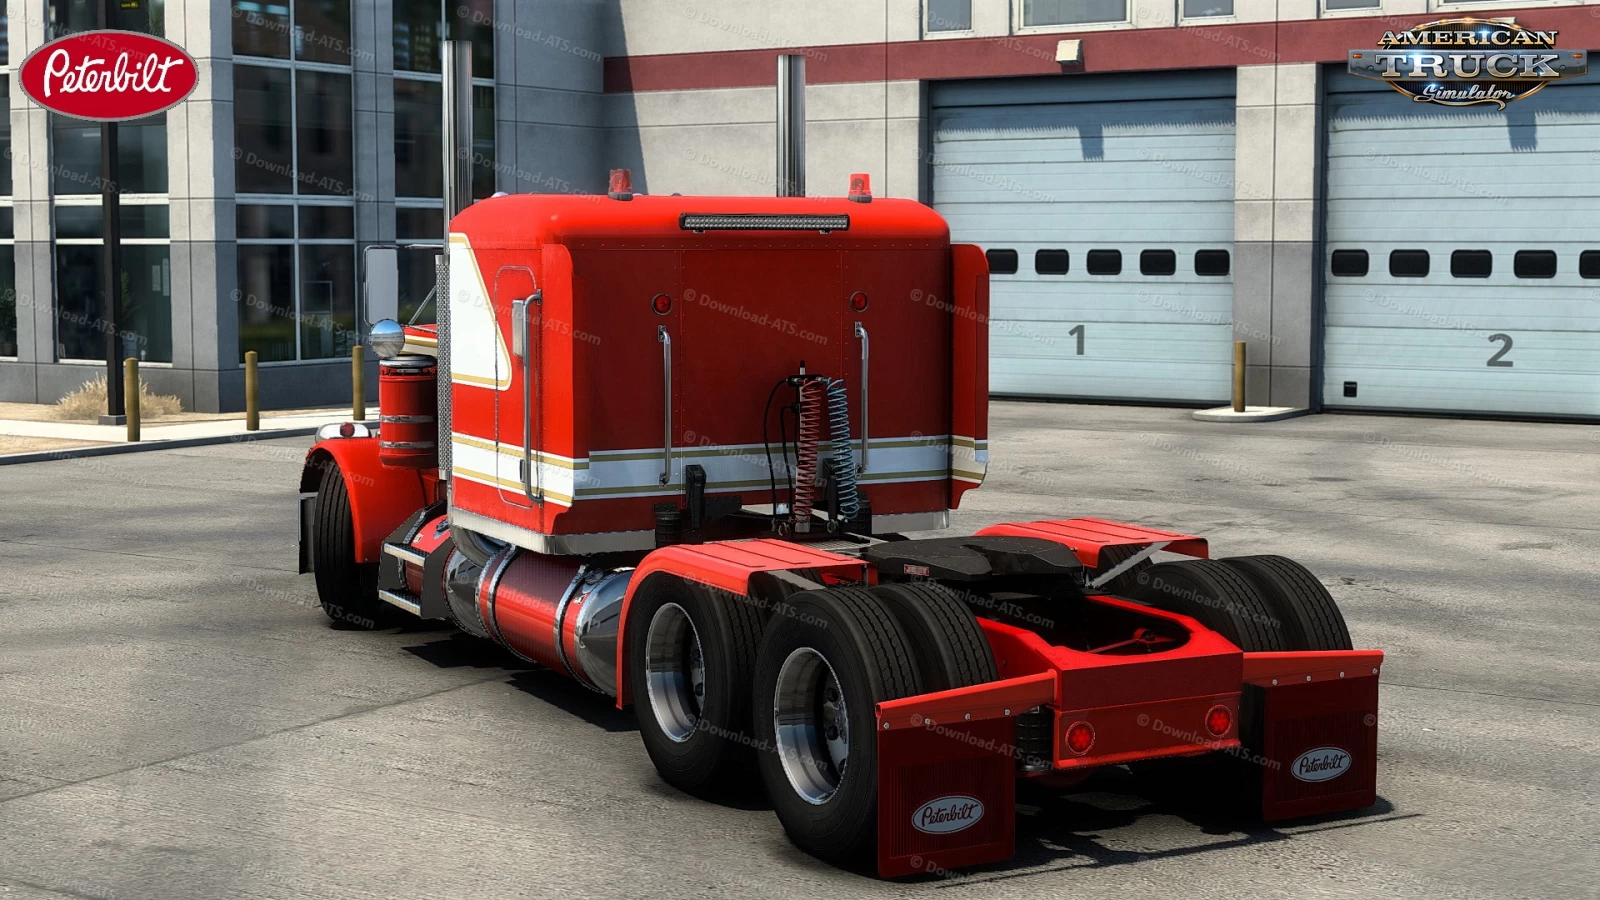 Peterbilt 359 Truck v1.0 By FLX Mods (1.43.x) for ATS